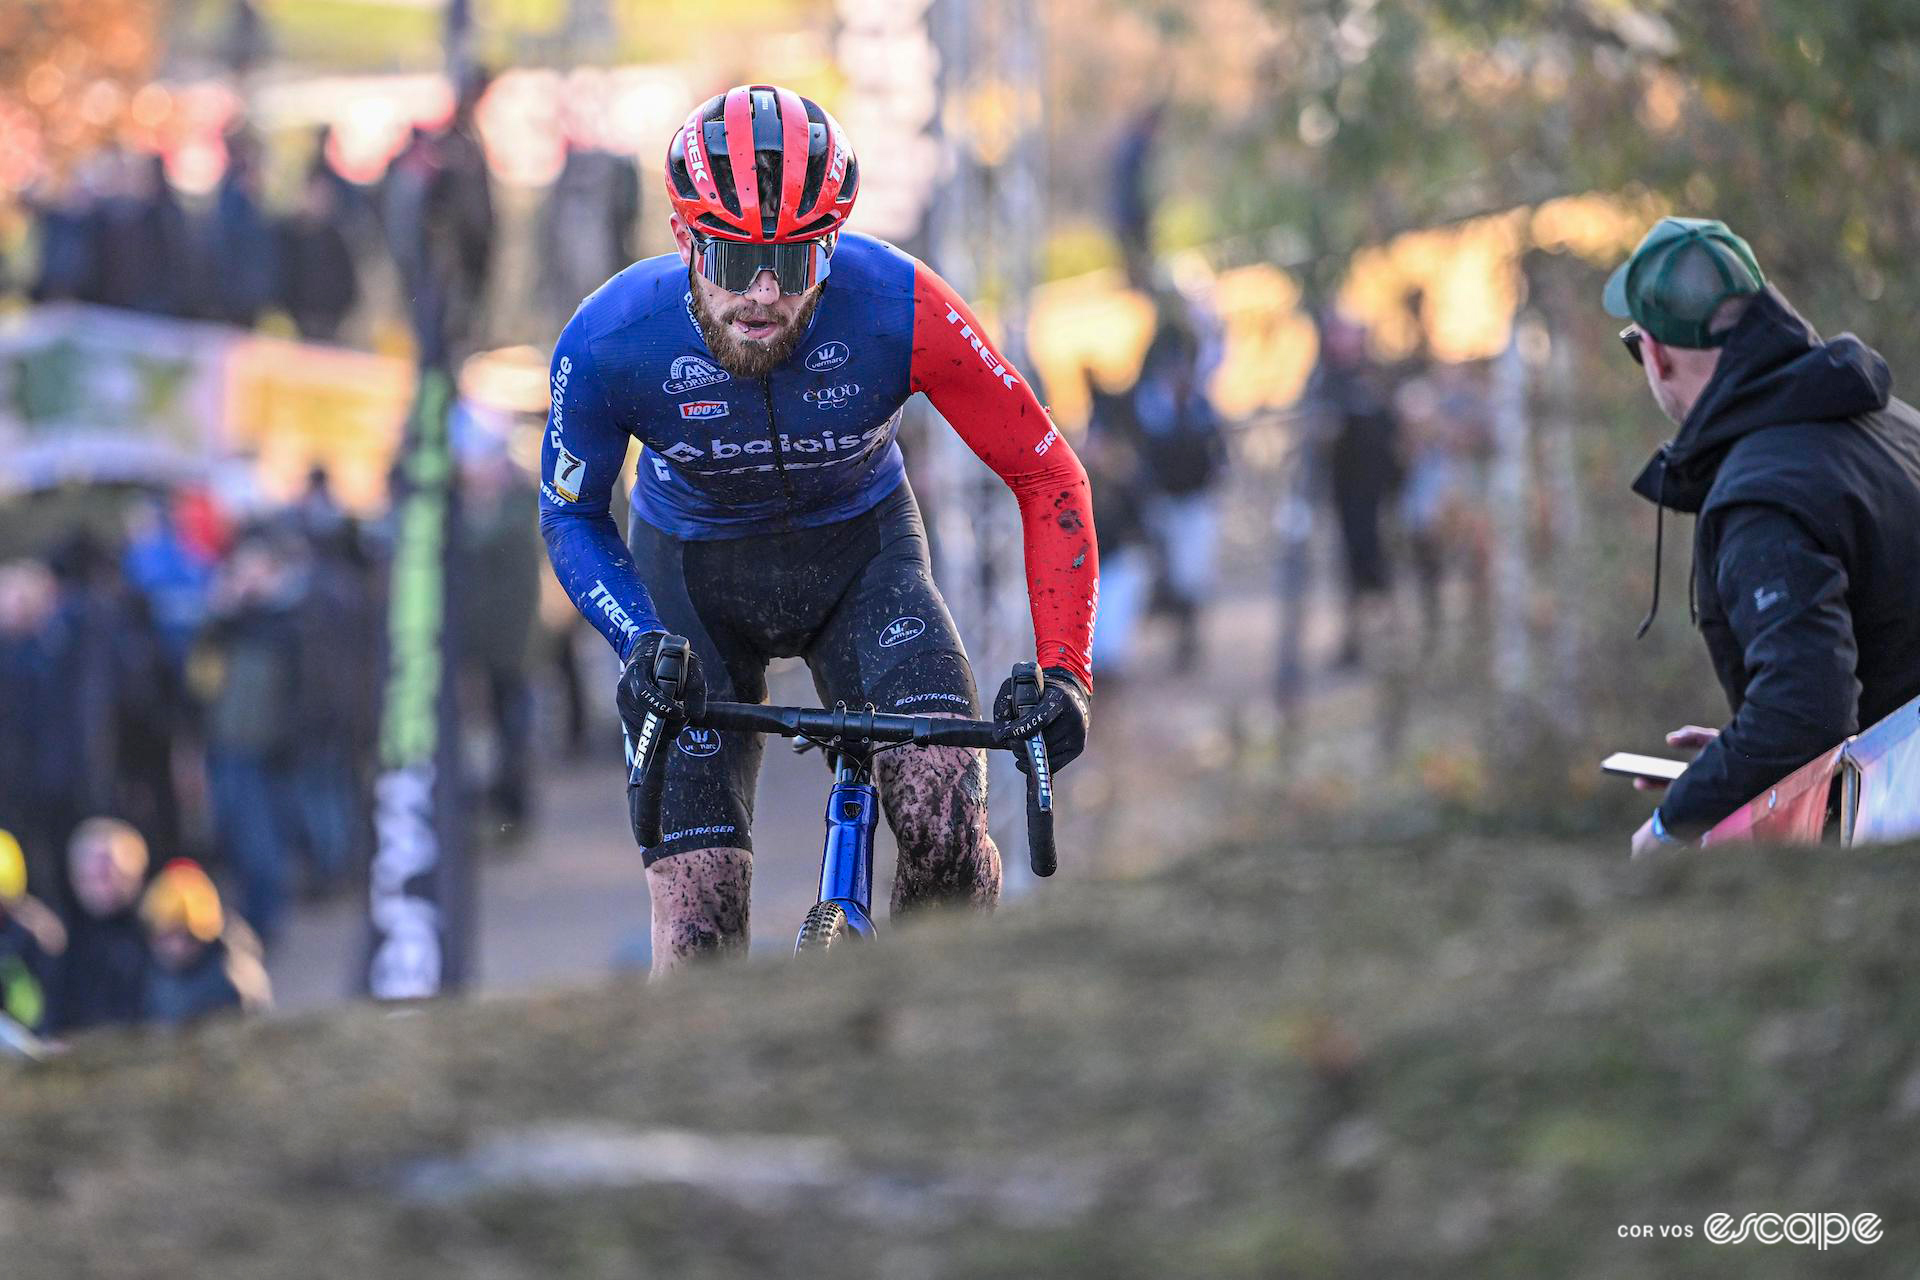 Joris Nieuwenhuis rides out of the saddle as he leads Superprestige Boom.